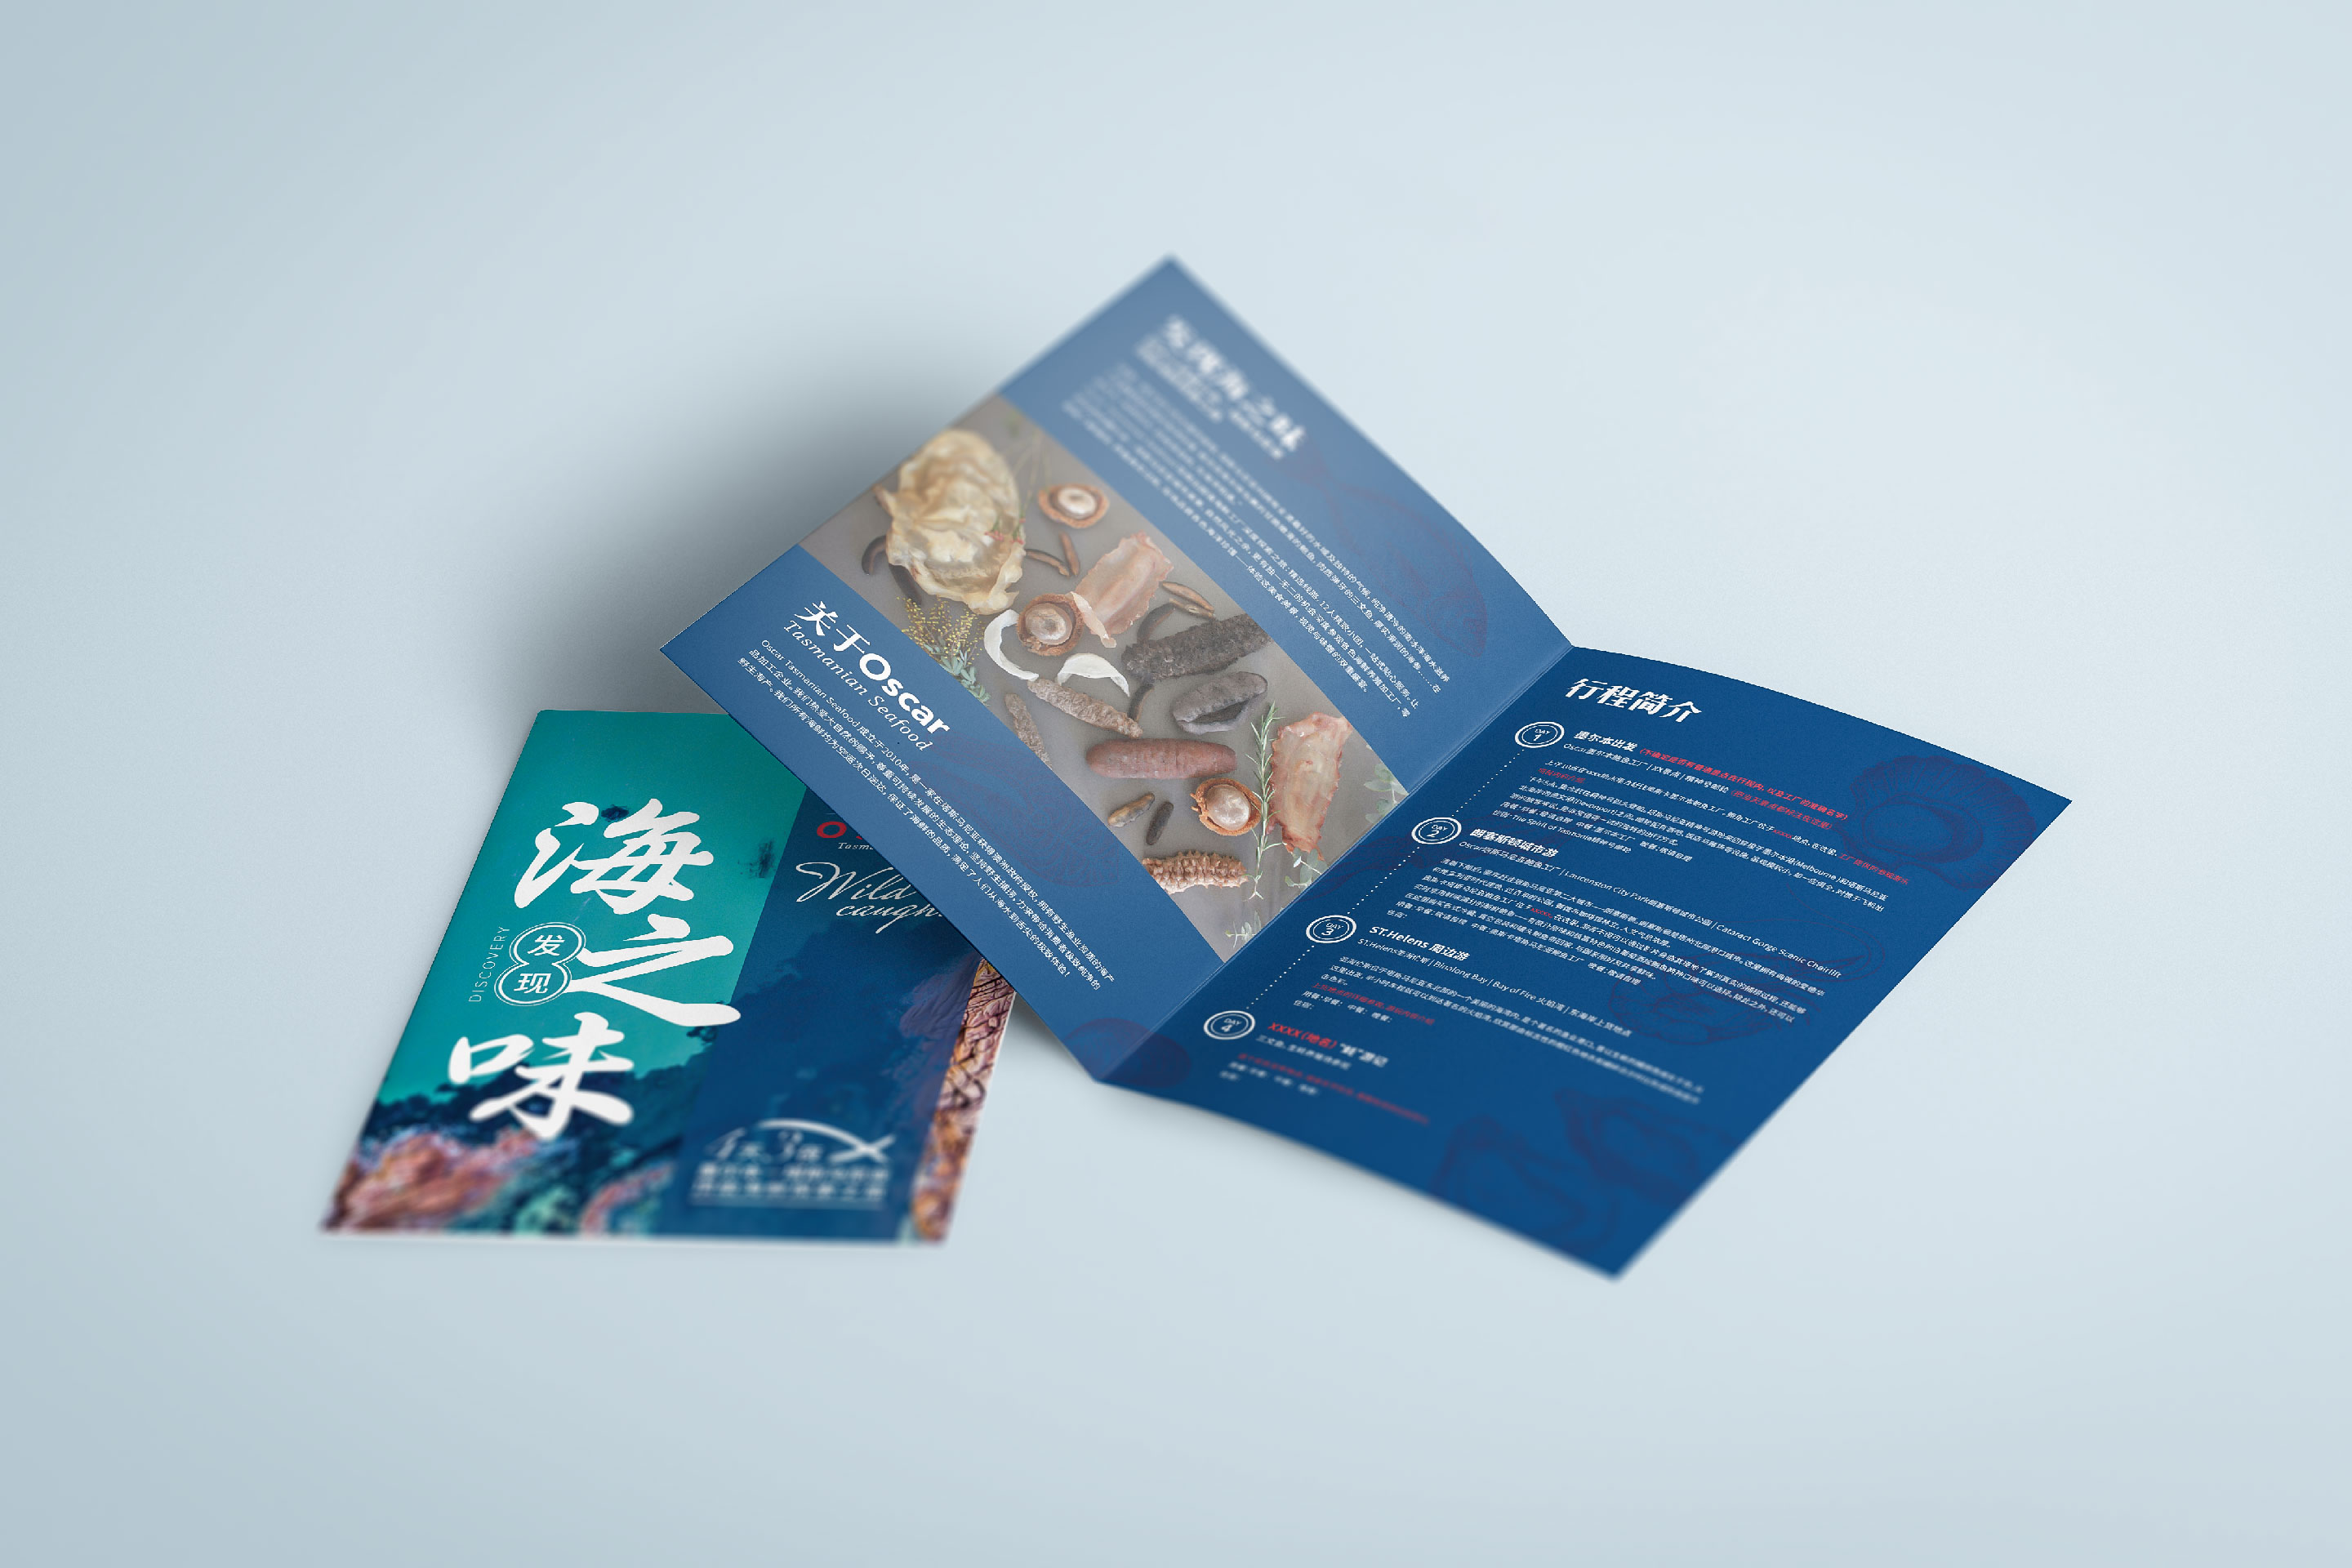 seafood tour brochure design by Z Creative Studio Branding & Graphic Design Melbourne